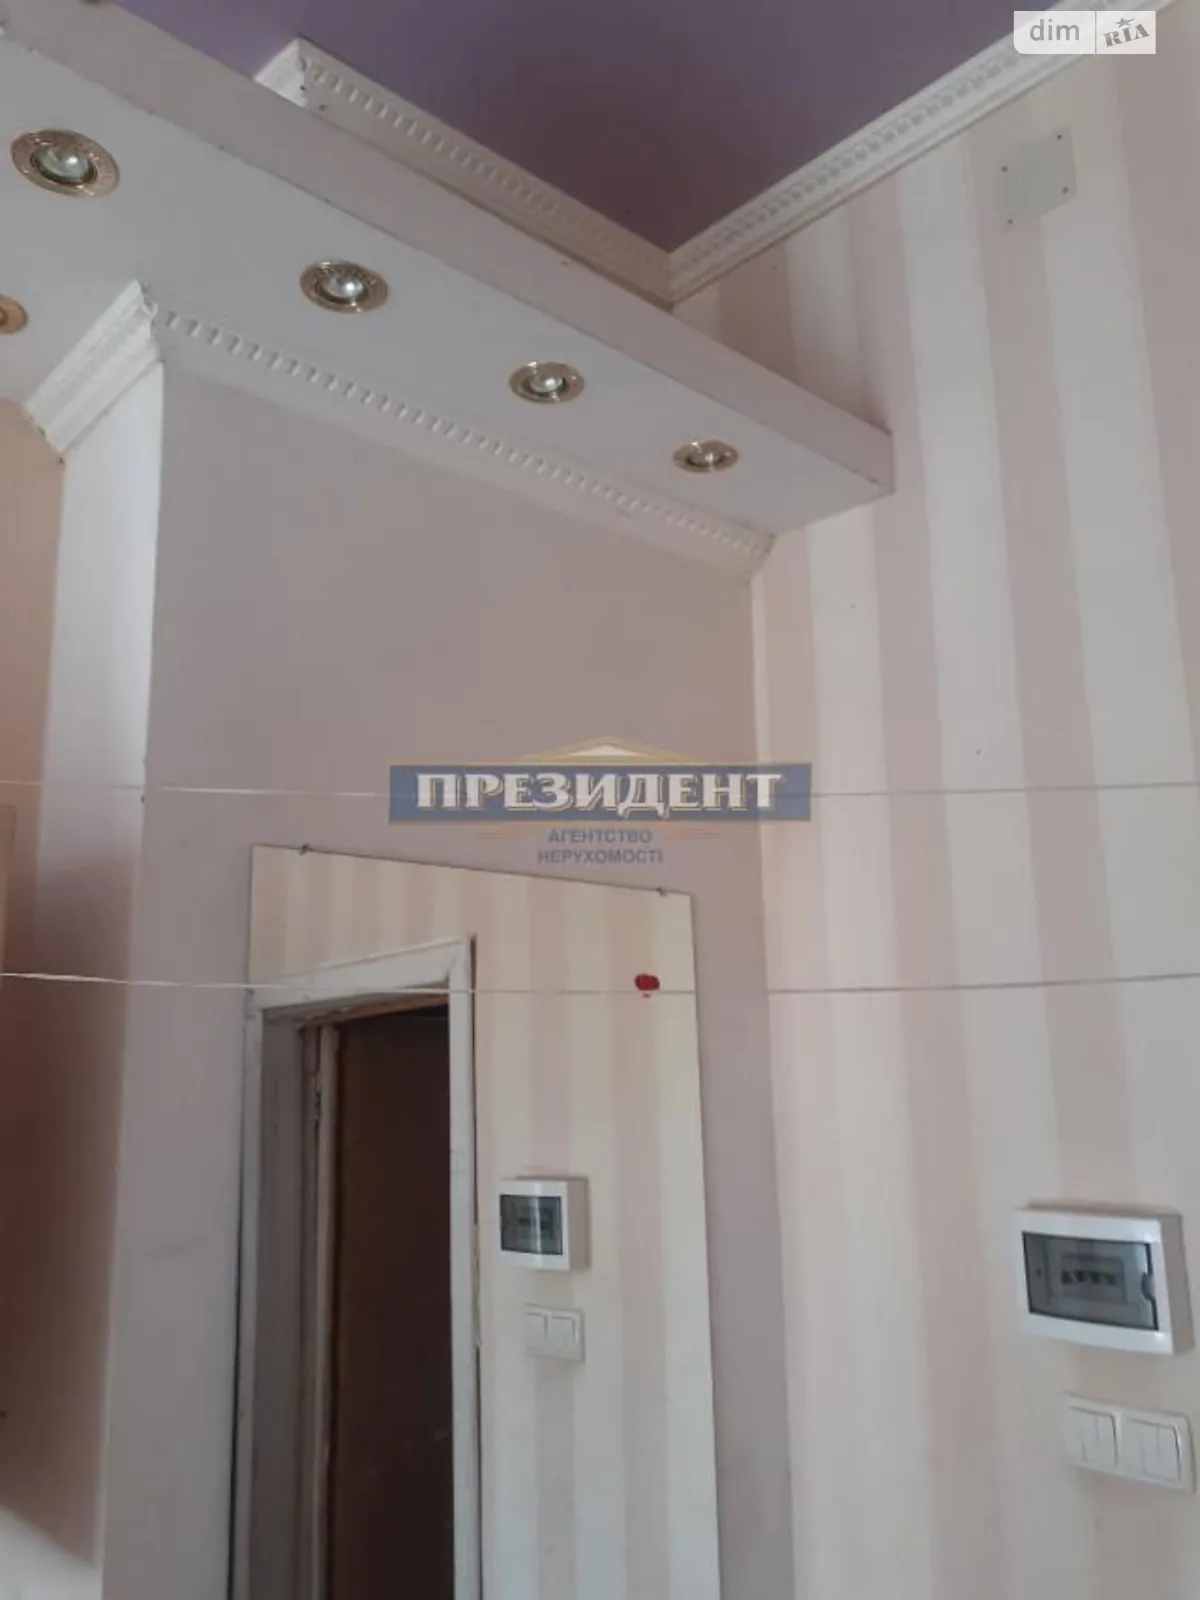 Продается комната 30 кв. м в Одессе, цена: 21000 $ - фото 1